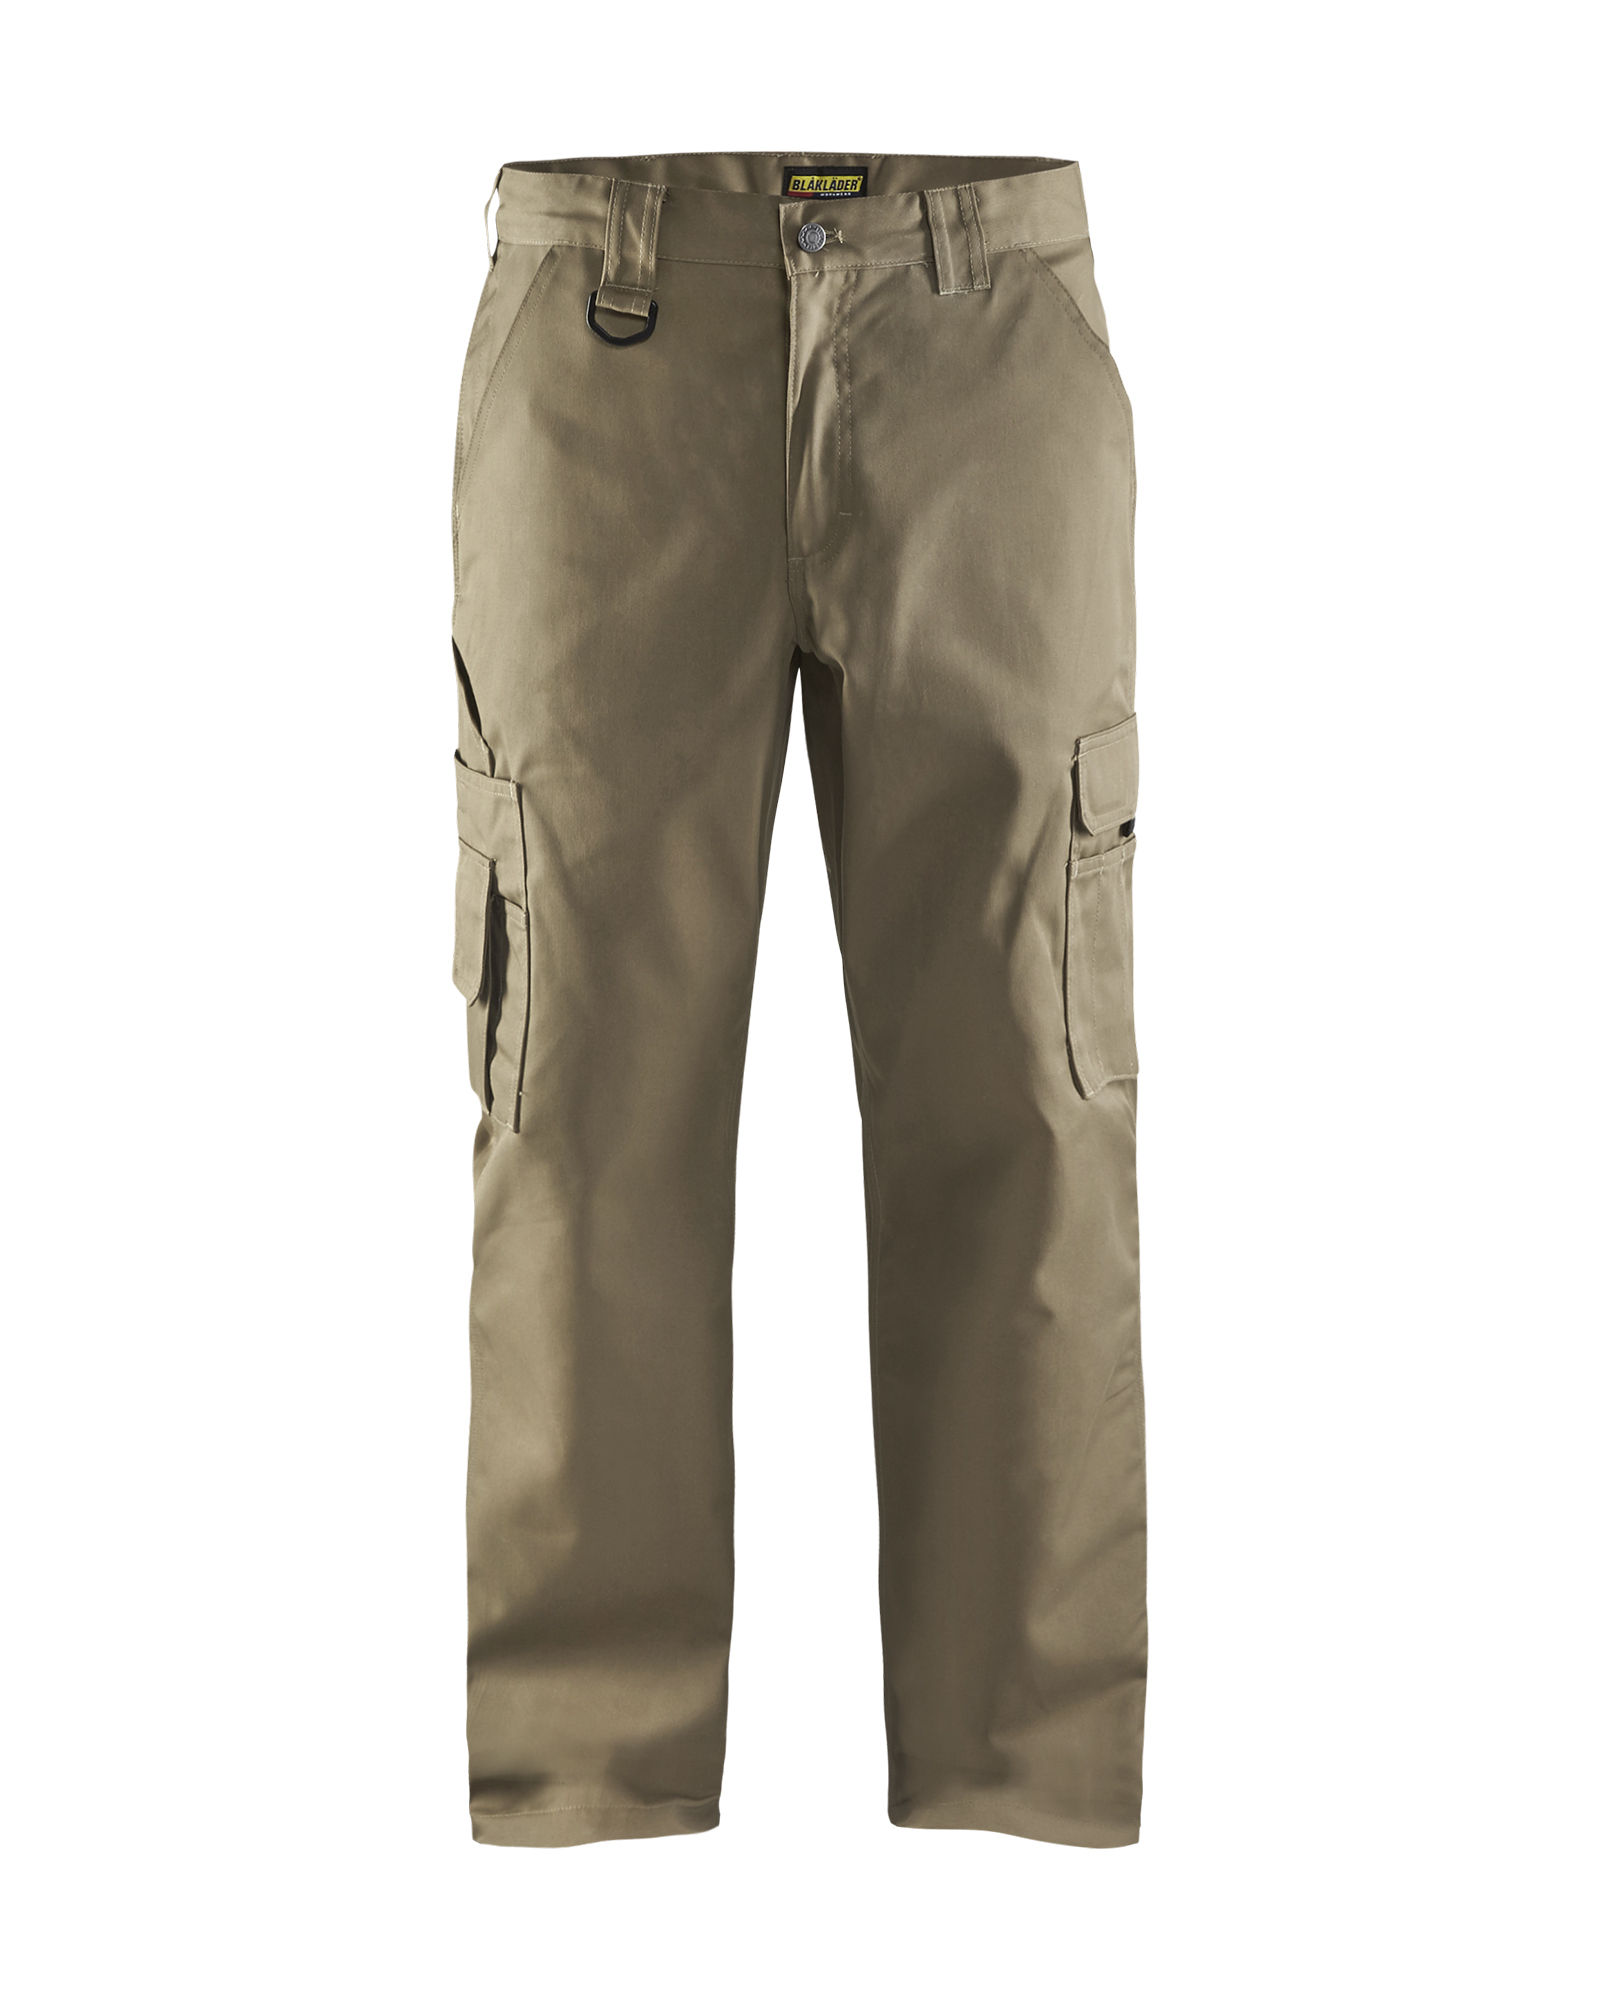 Pantalon maintenance+ Blåkläder 1407 Beige Blaklader - 140718002400C